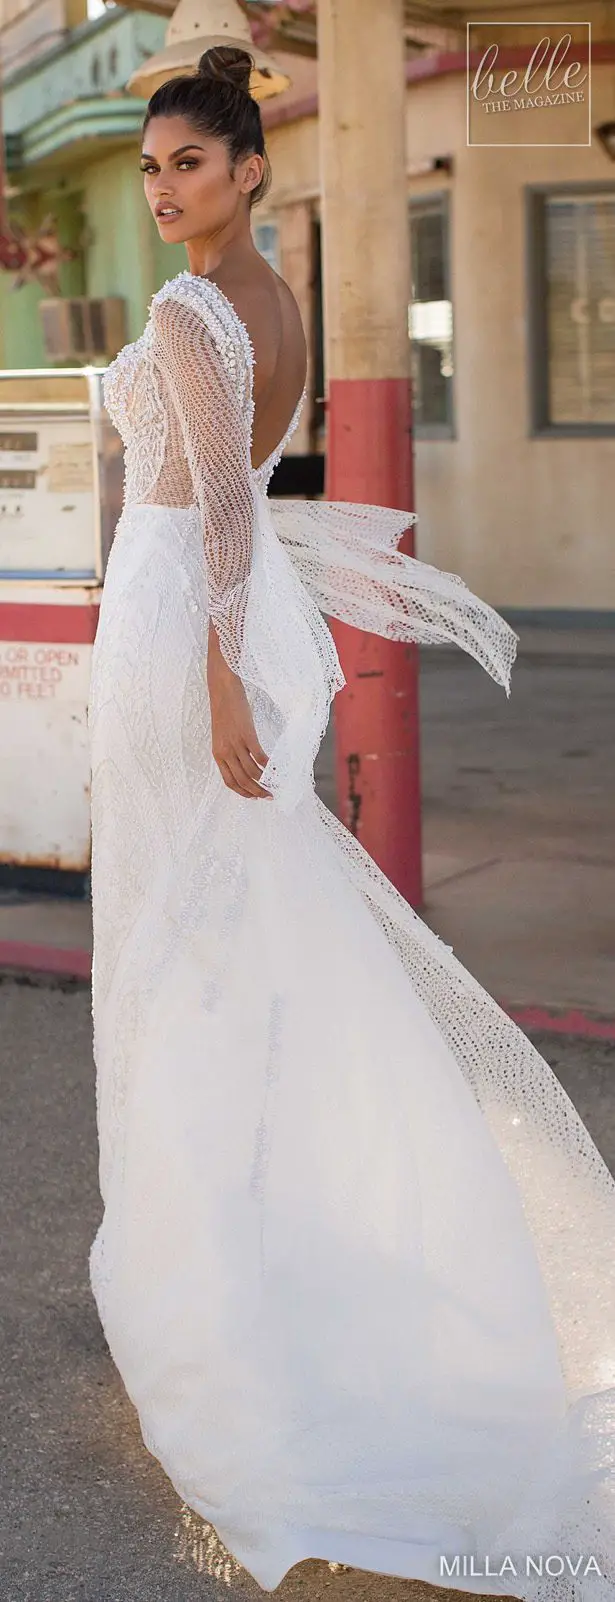 Milla Nova Wedding Dresses 2019 - California Dream Collection - Grape 121